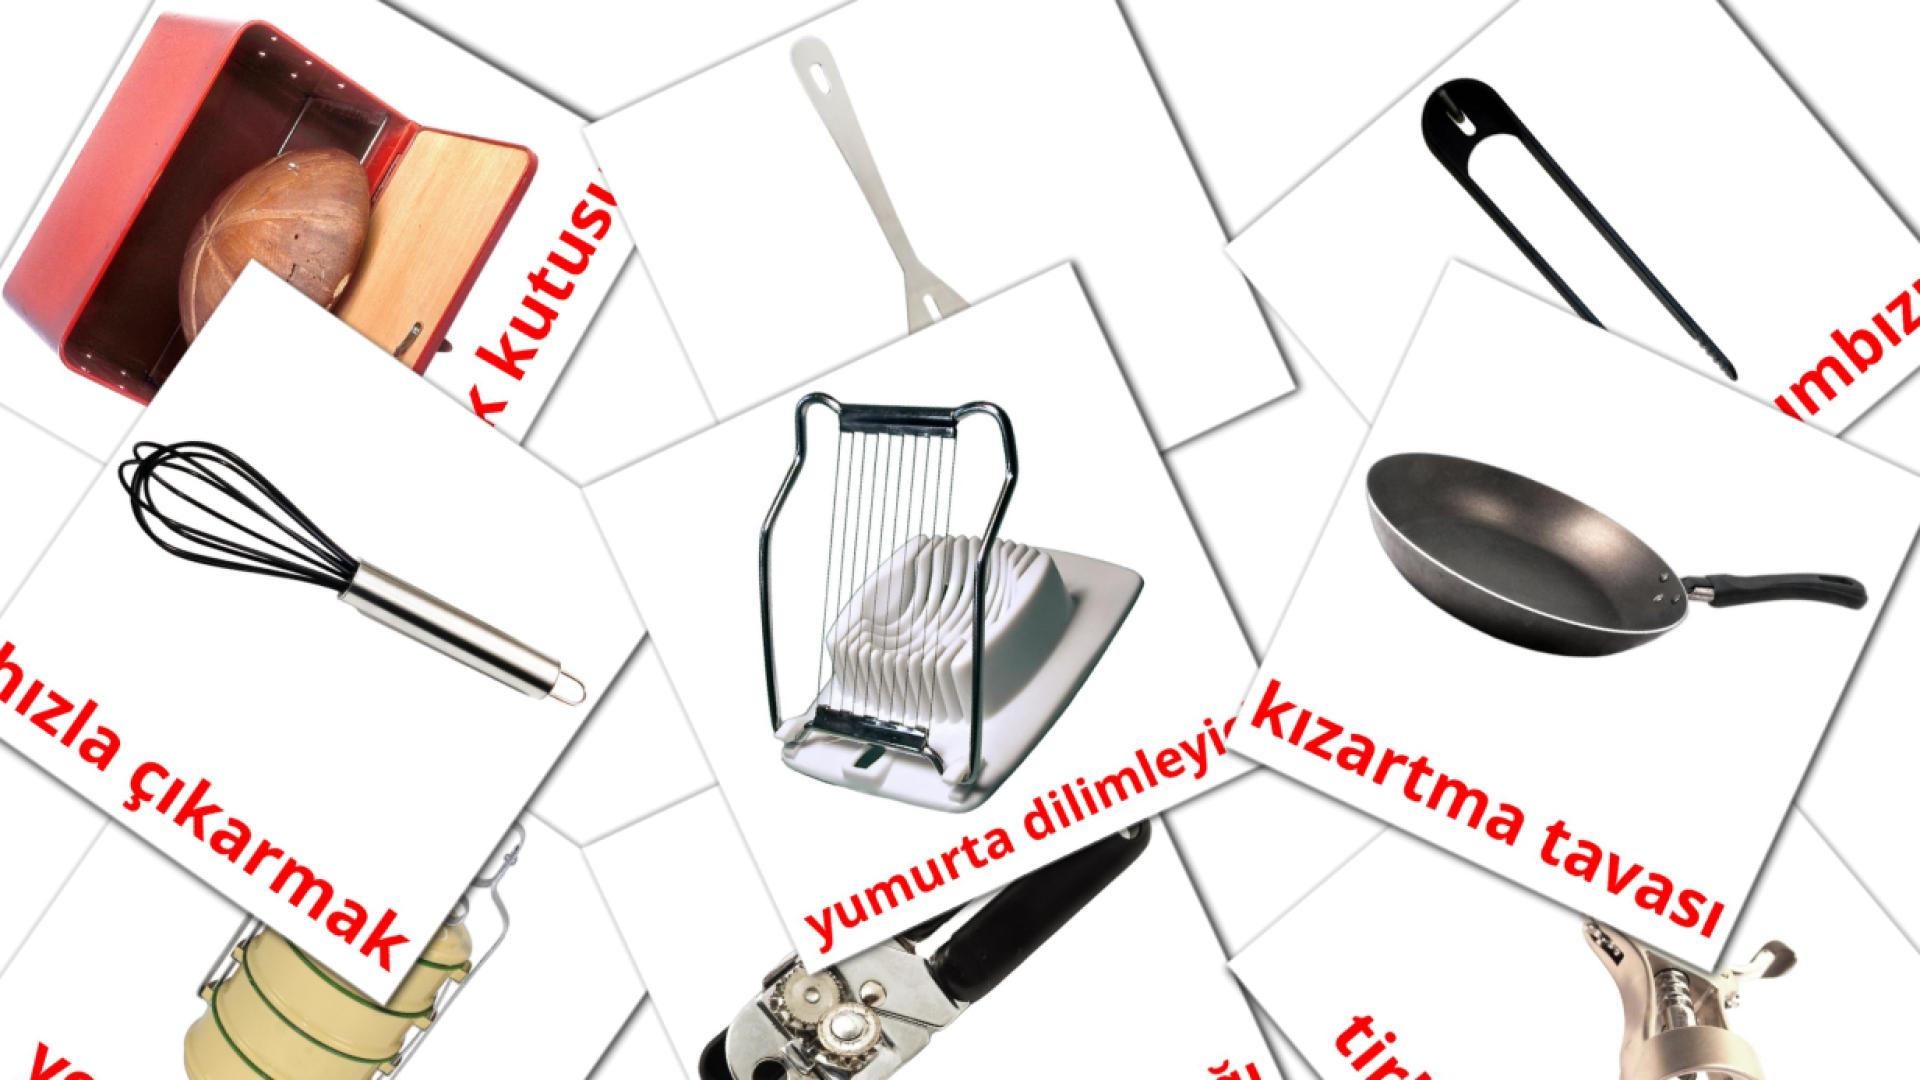 31 tarjetas didacticas de Kitchenware mutfak eşyaları